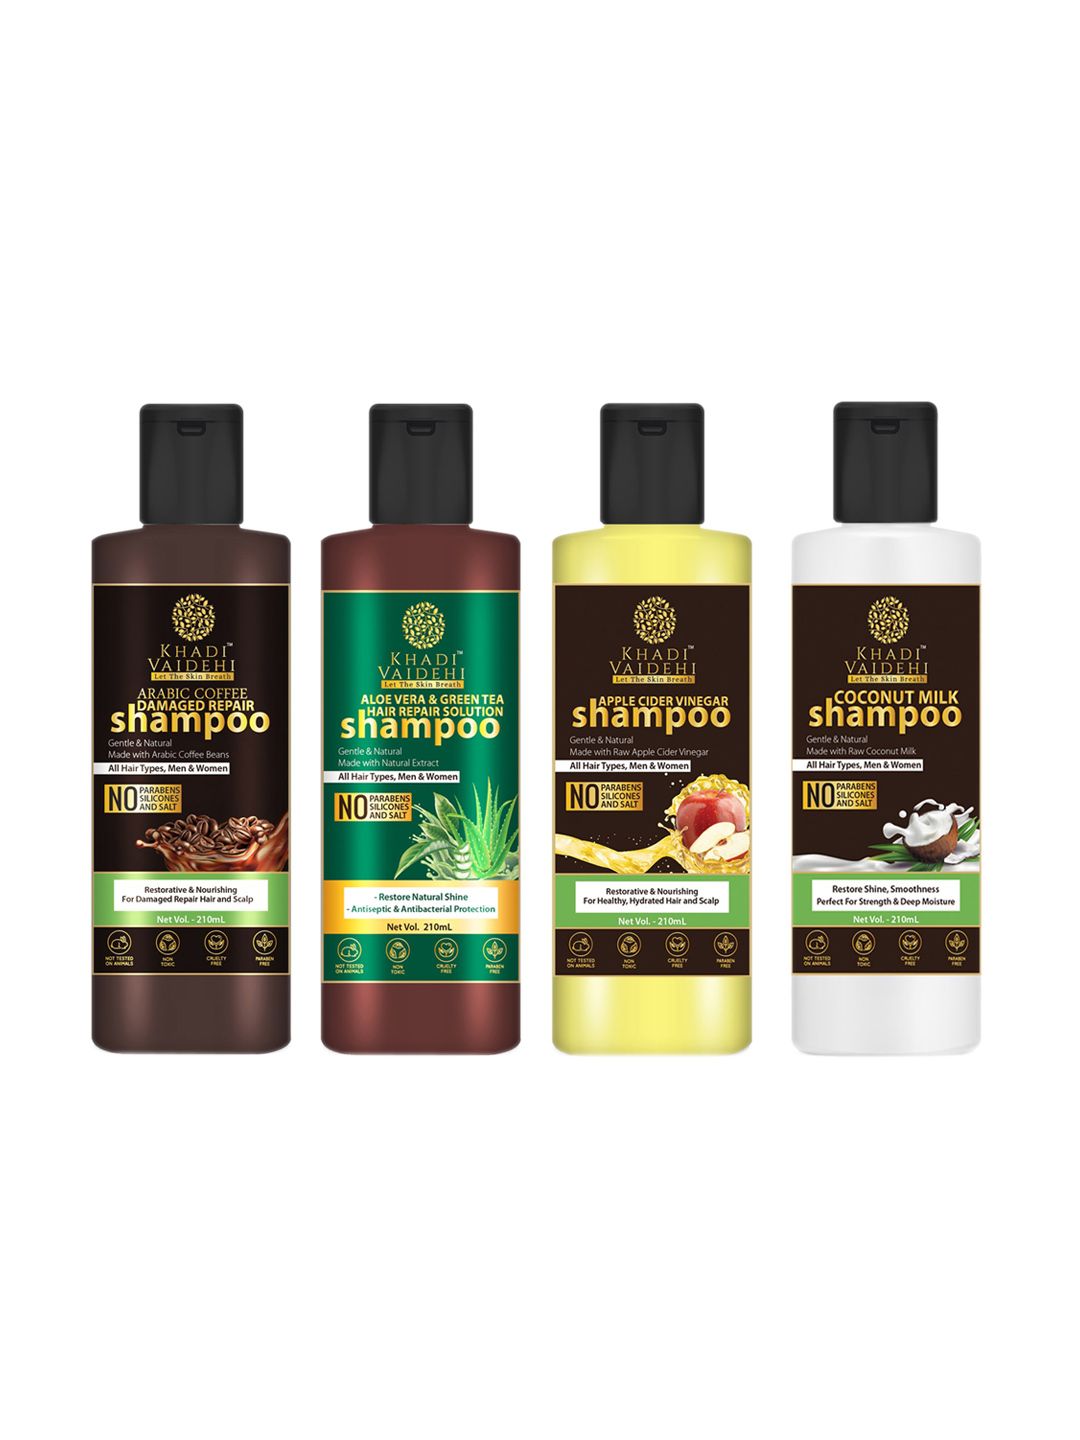 Khadi Vaidehi Set of 4 Paraben-Free Shampoos for All Hair Types - 210ml each Price in India